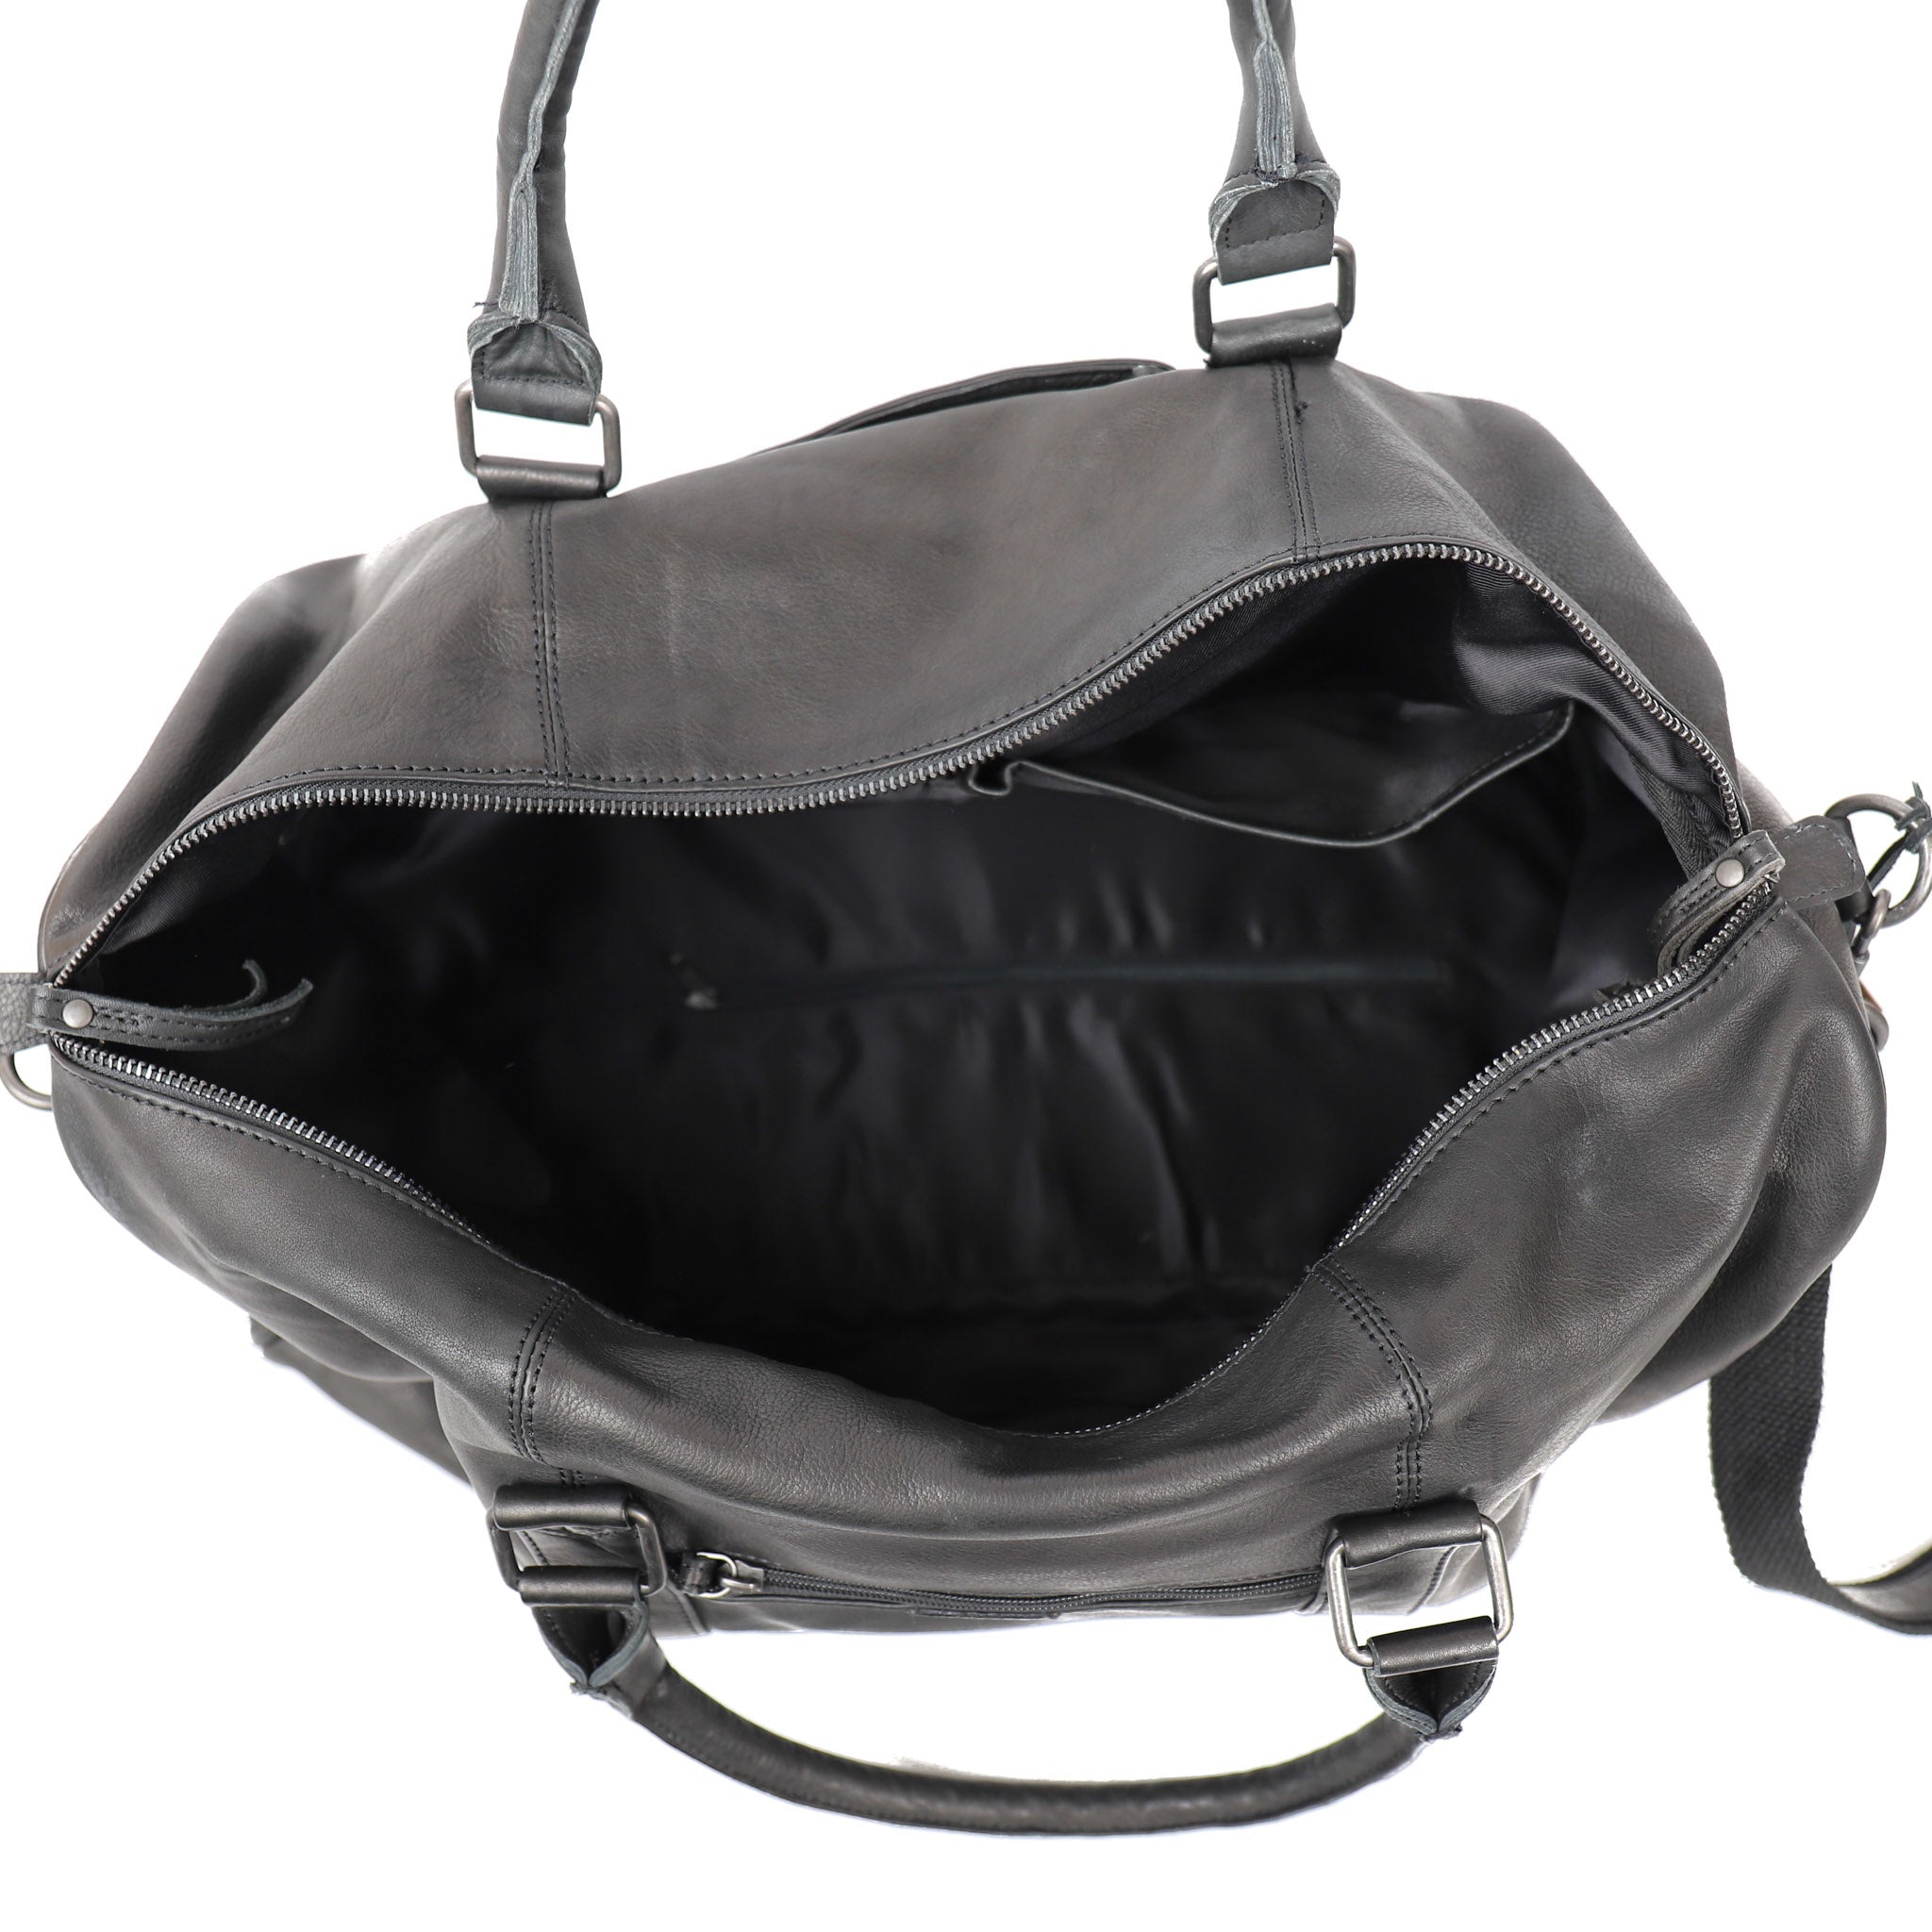 Weekend bag 'Daniel' L black - CP 2292